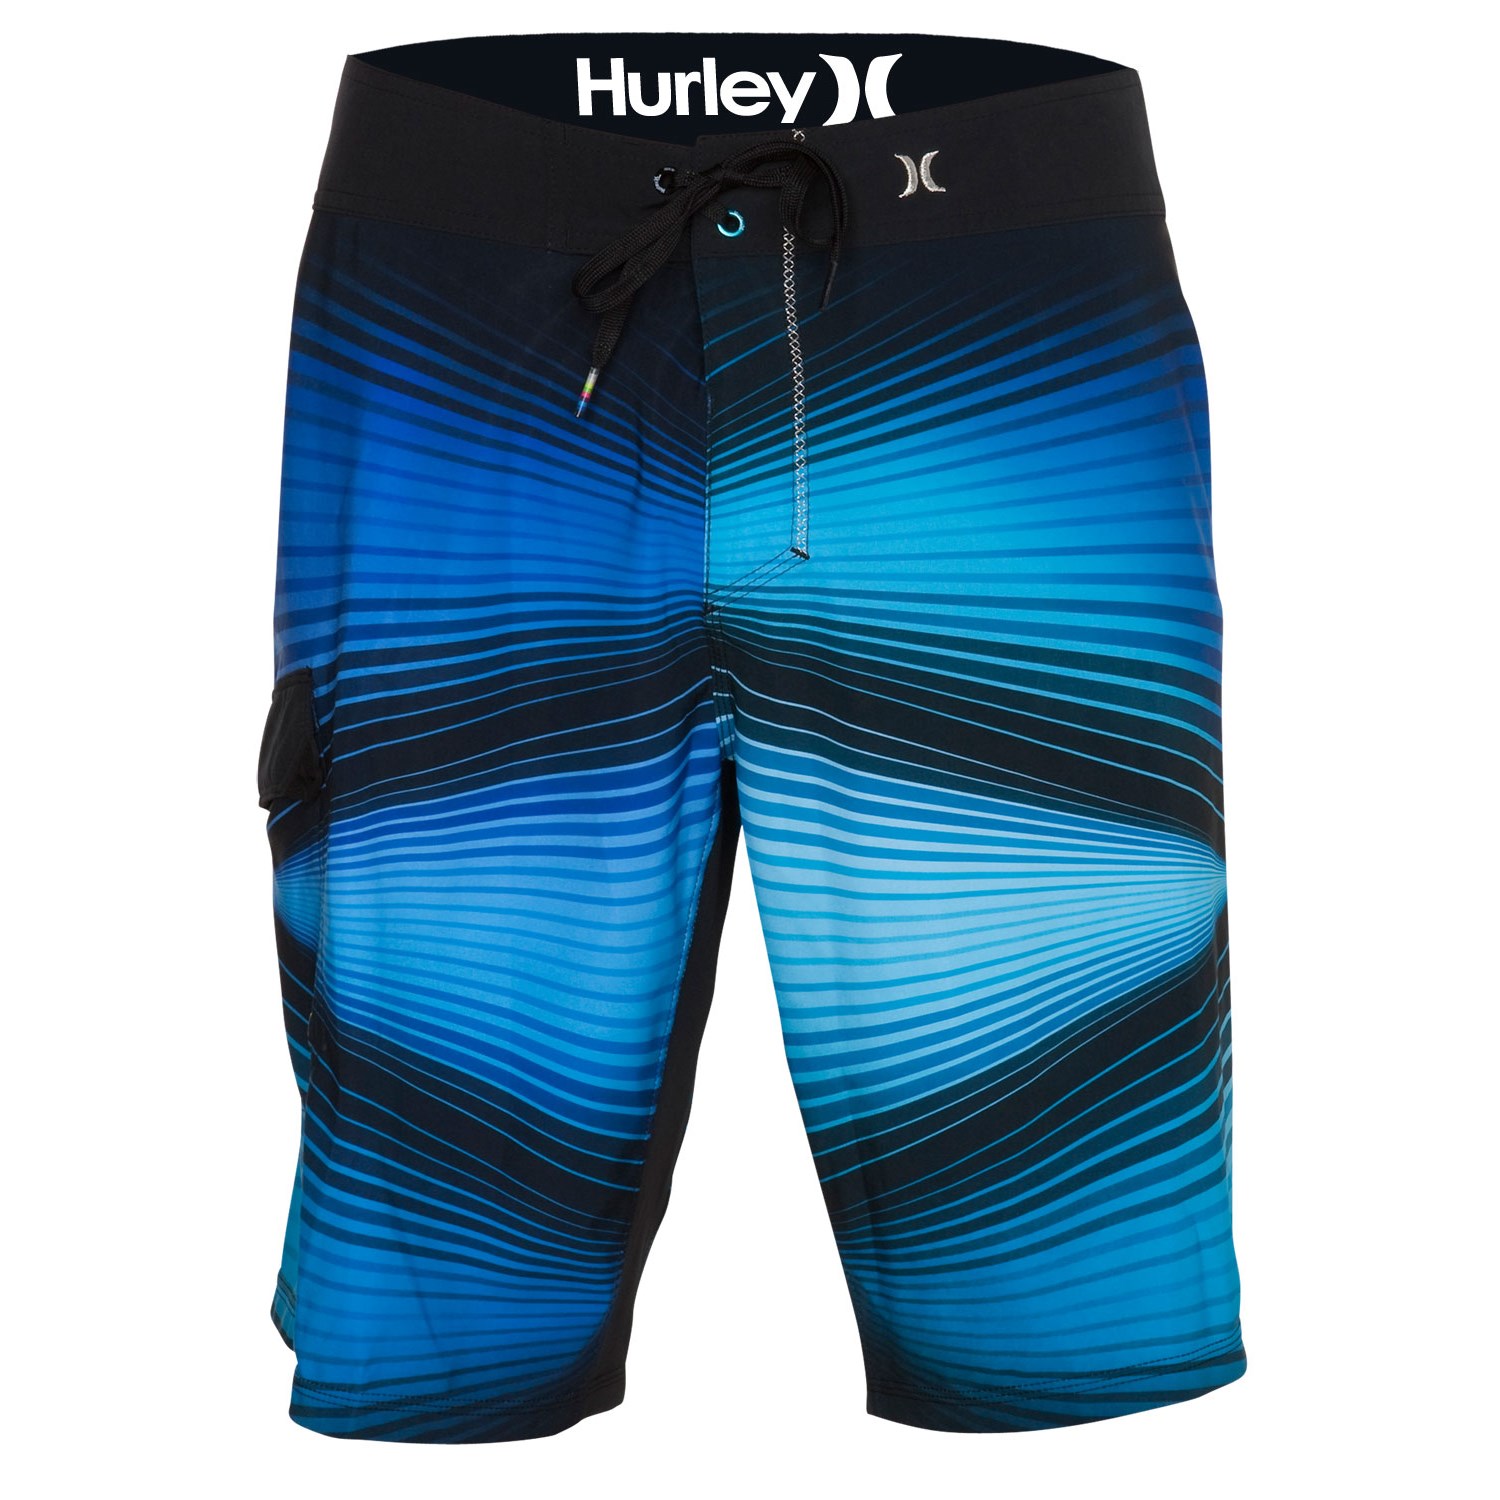 Hurley Phantom 60 Dimension Boardshorts | evo outlet